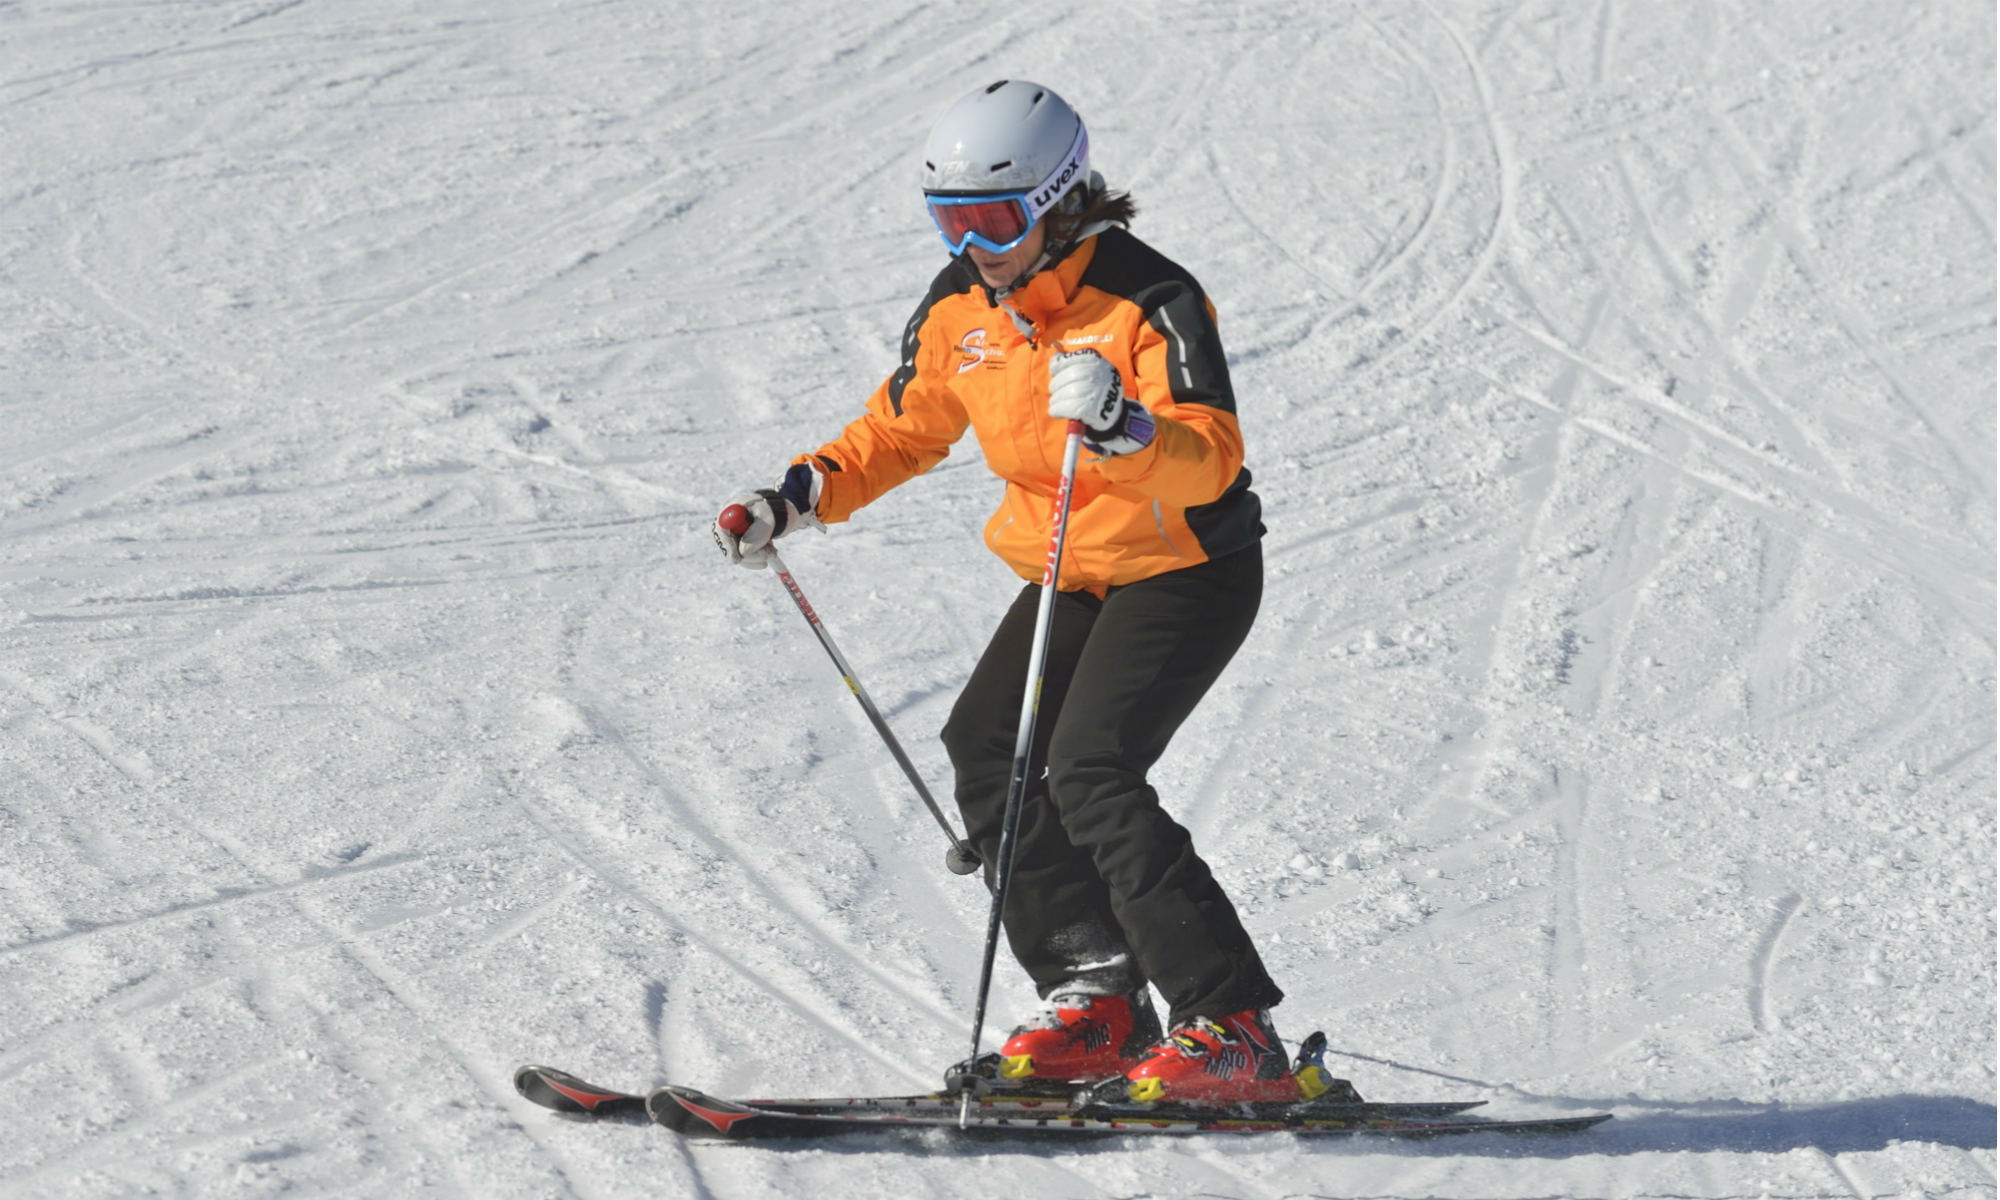 Ingrid Salvenmoser demonstrates the correct use of ski sticks when doing parallel turns on a sunny piste.